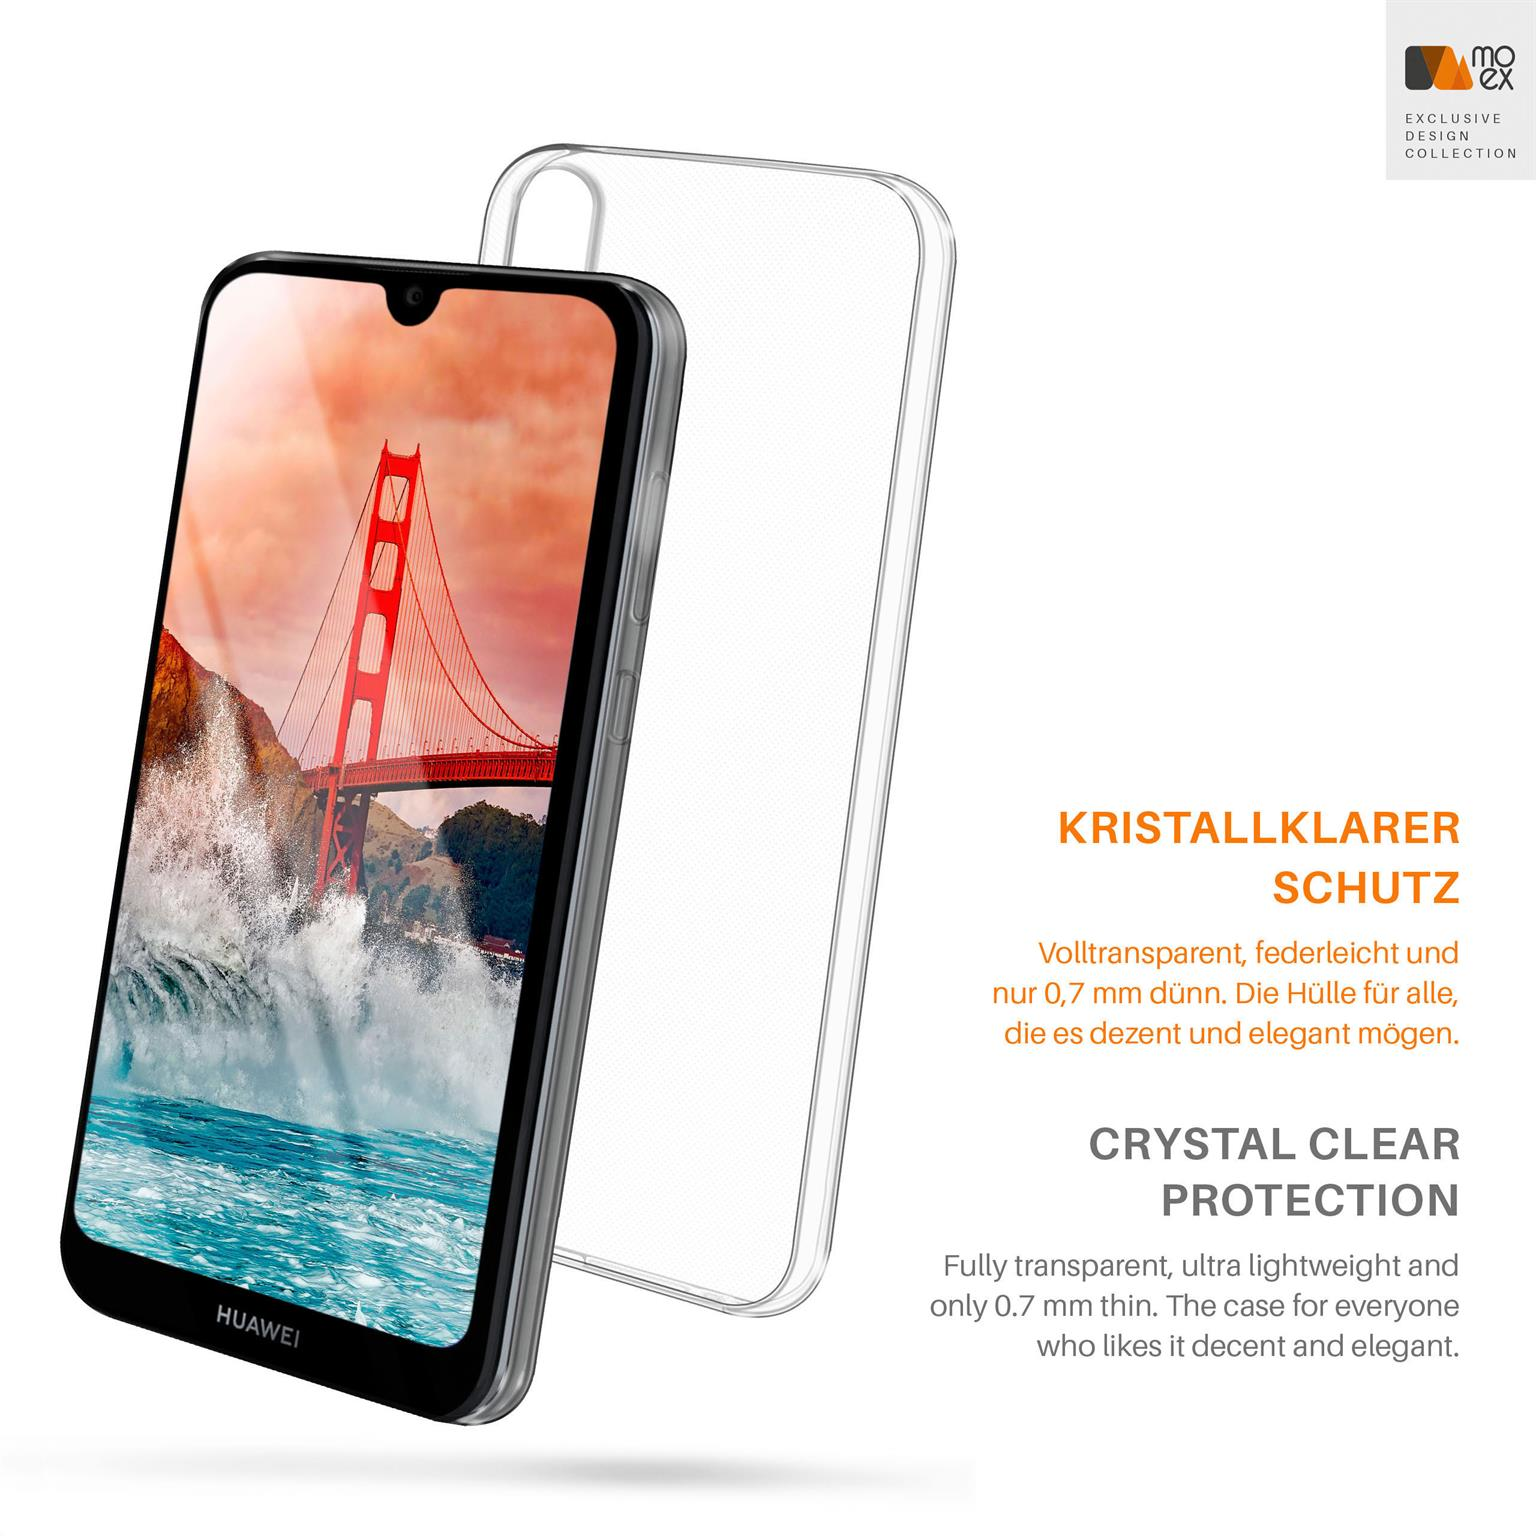 Y5 Huawei, Backcover, (2019), Crystal-Clear Case, MOEX Aero